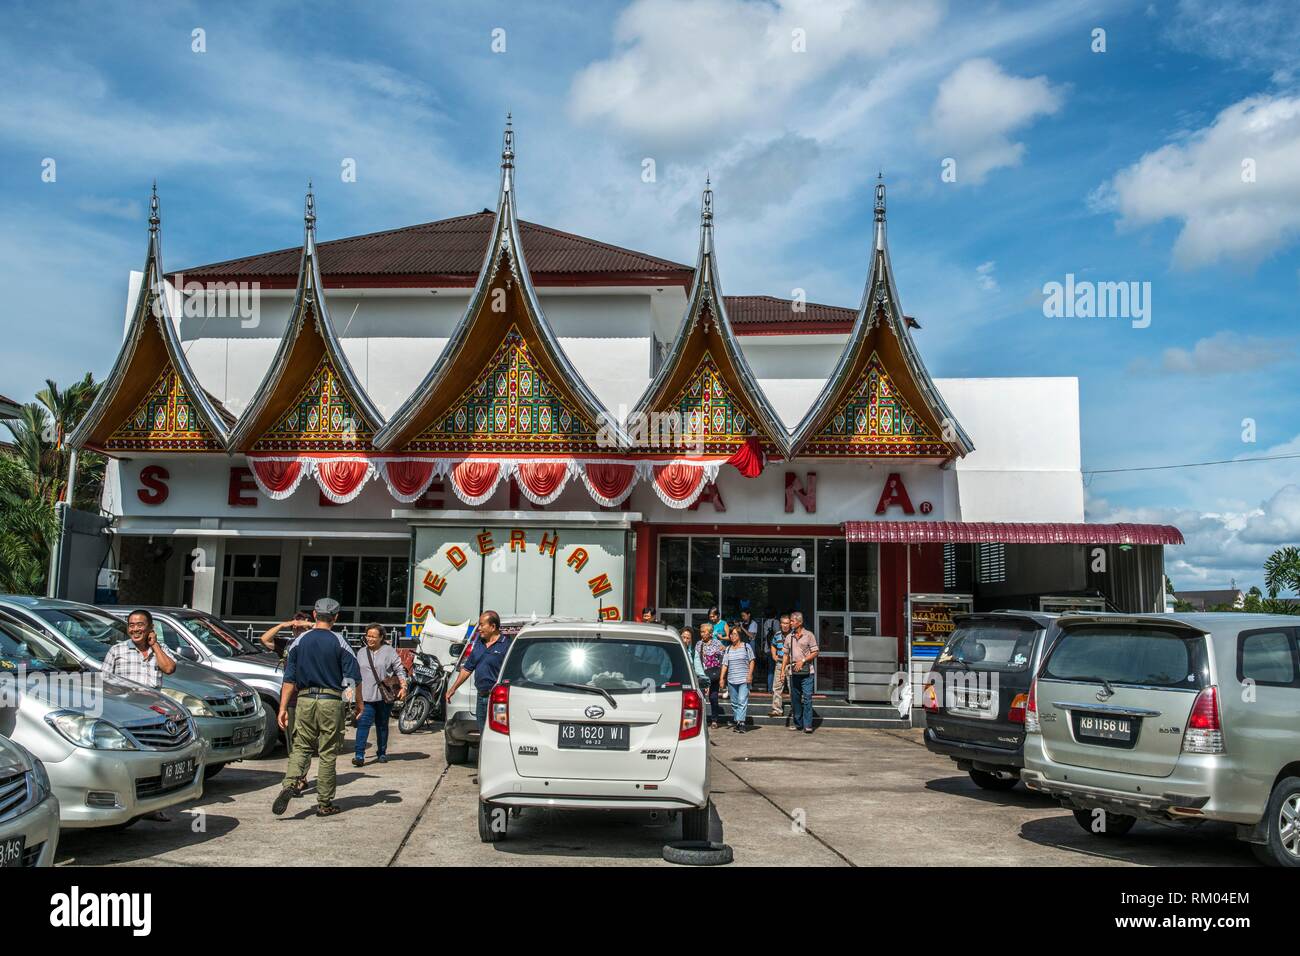 Restoran Sederhana, Pontianak, West Kalimantan, Indonesia Stock Photo - Alamy